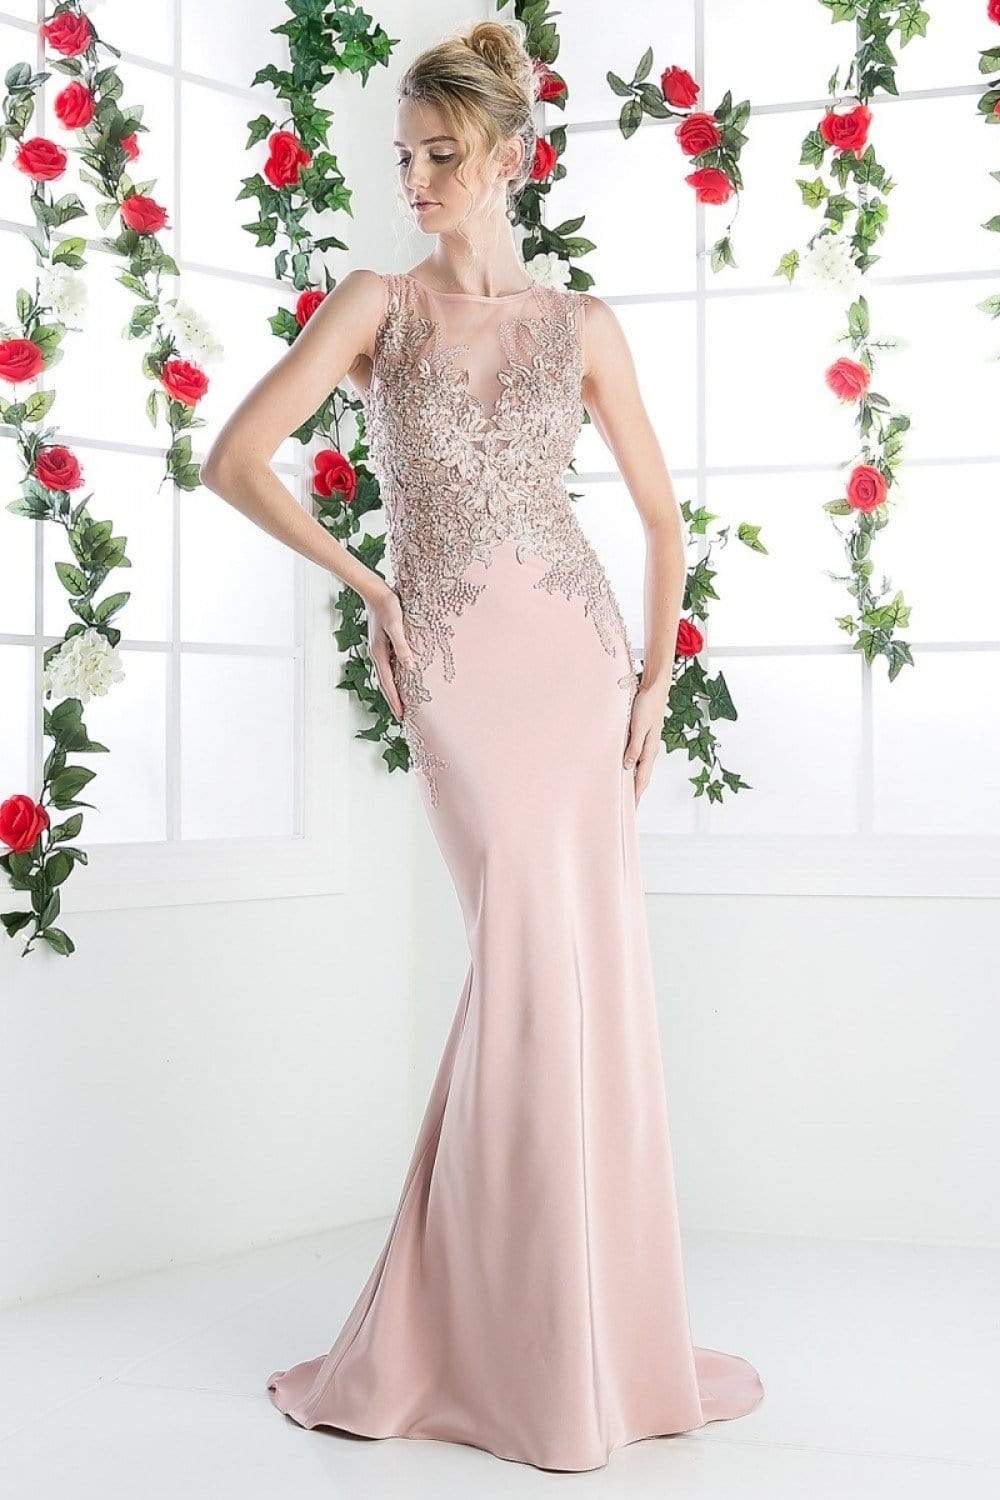 Cinderella Divine - Floral Applique Illusion Bateau Sheath Dress Special Occasion Dress 2 / Dusty Rose